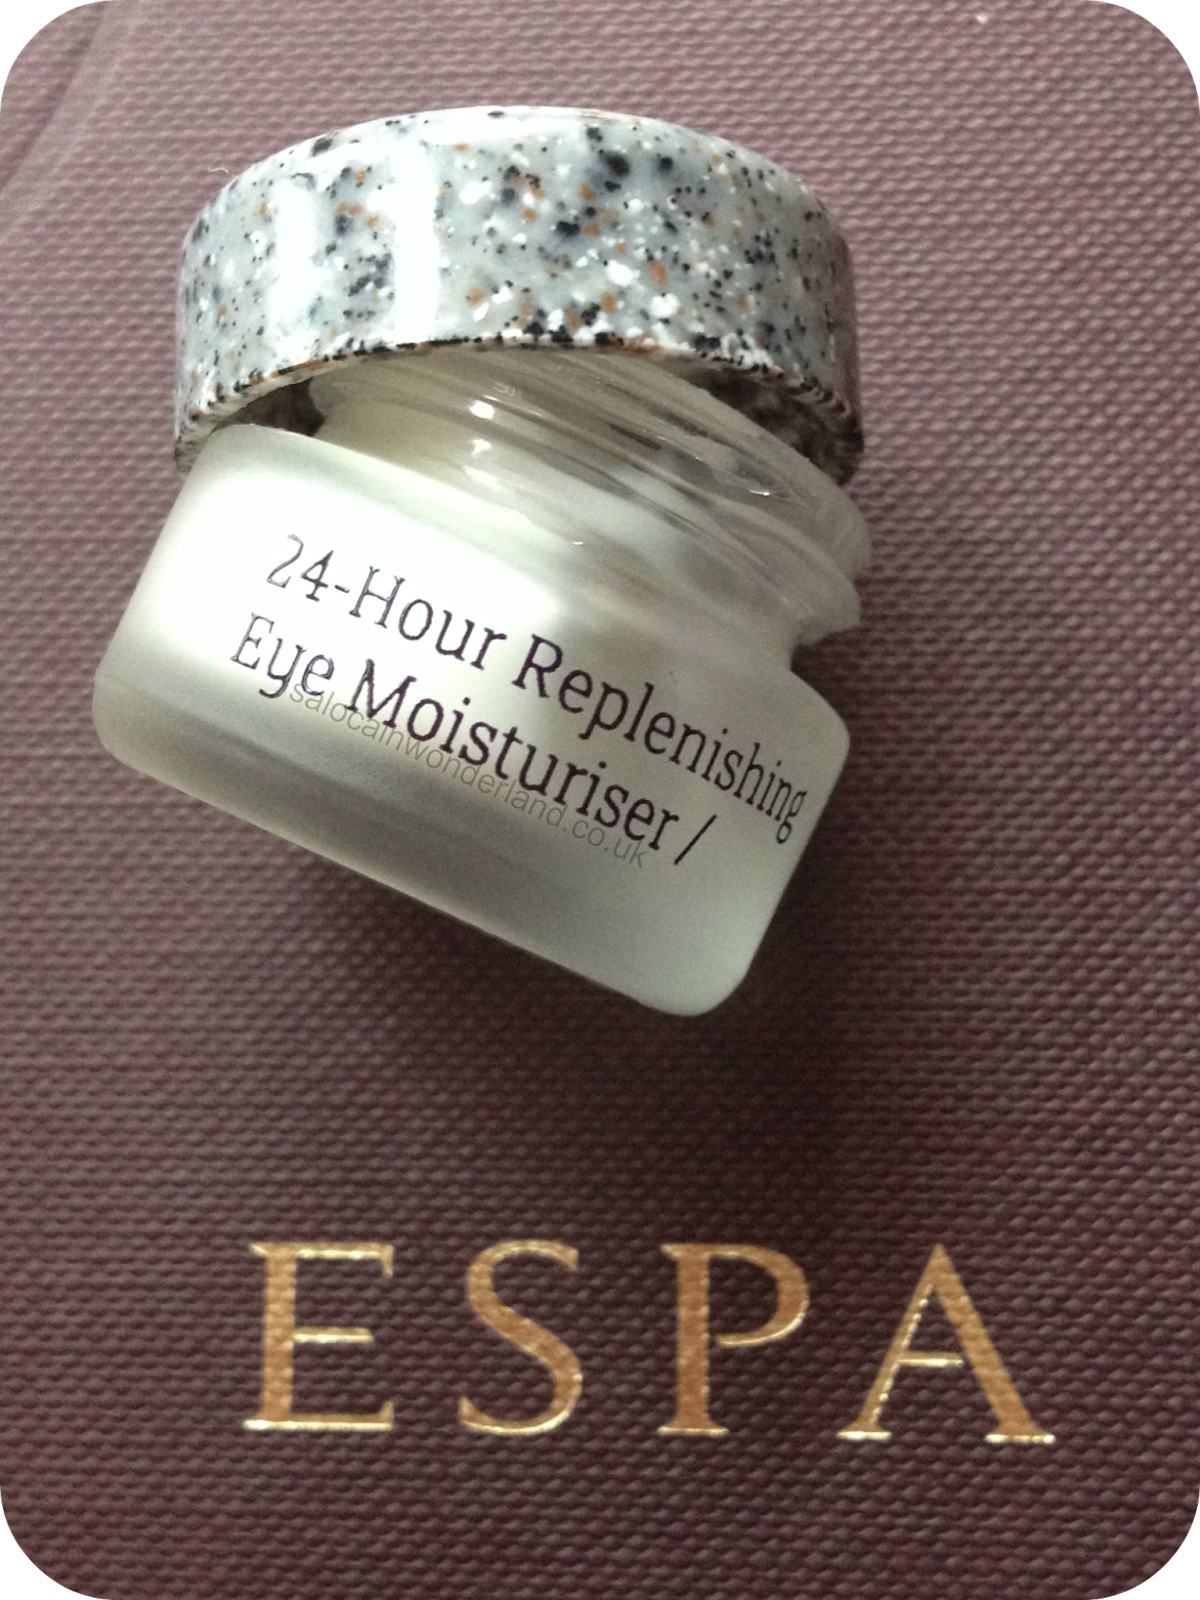 espa 24 hour replenishing eye moisturiser